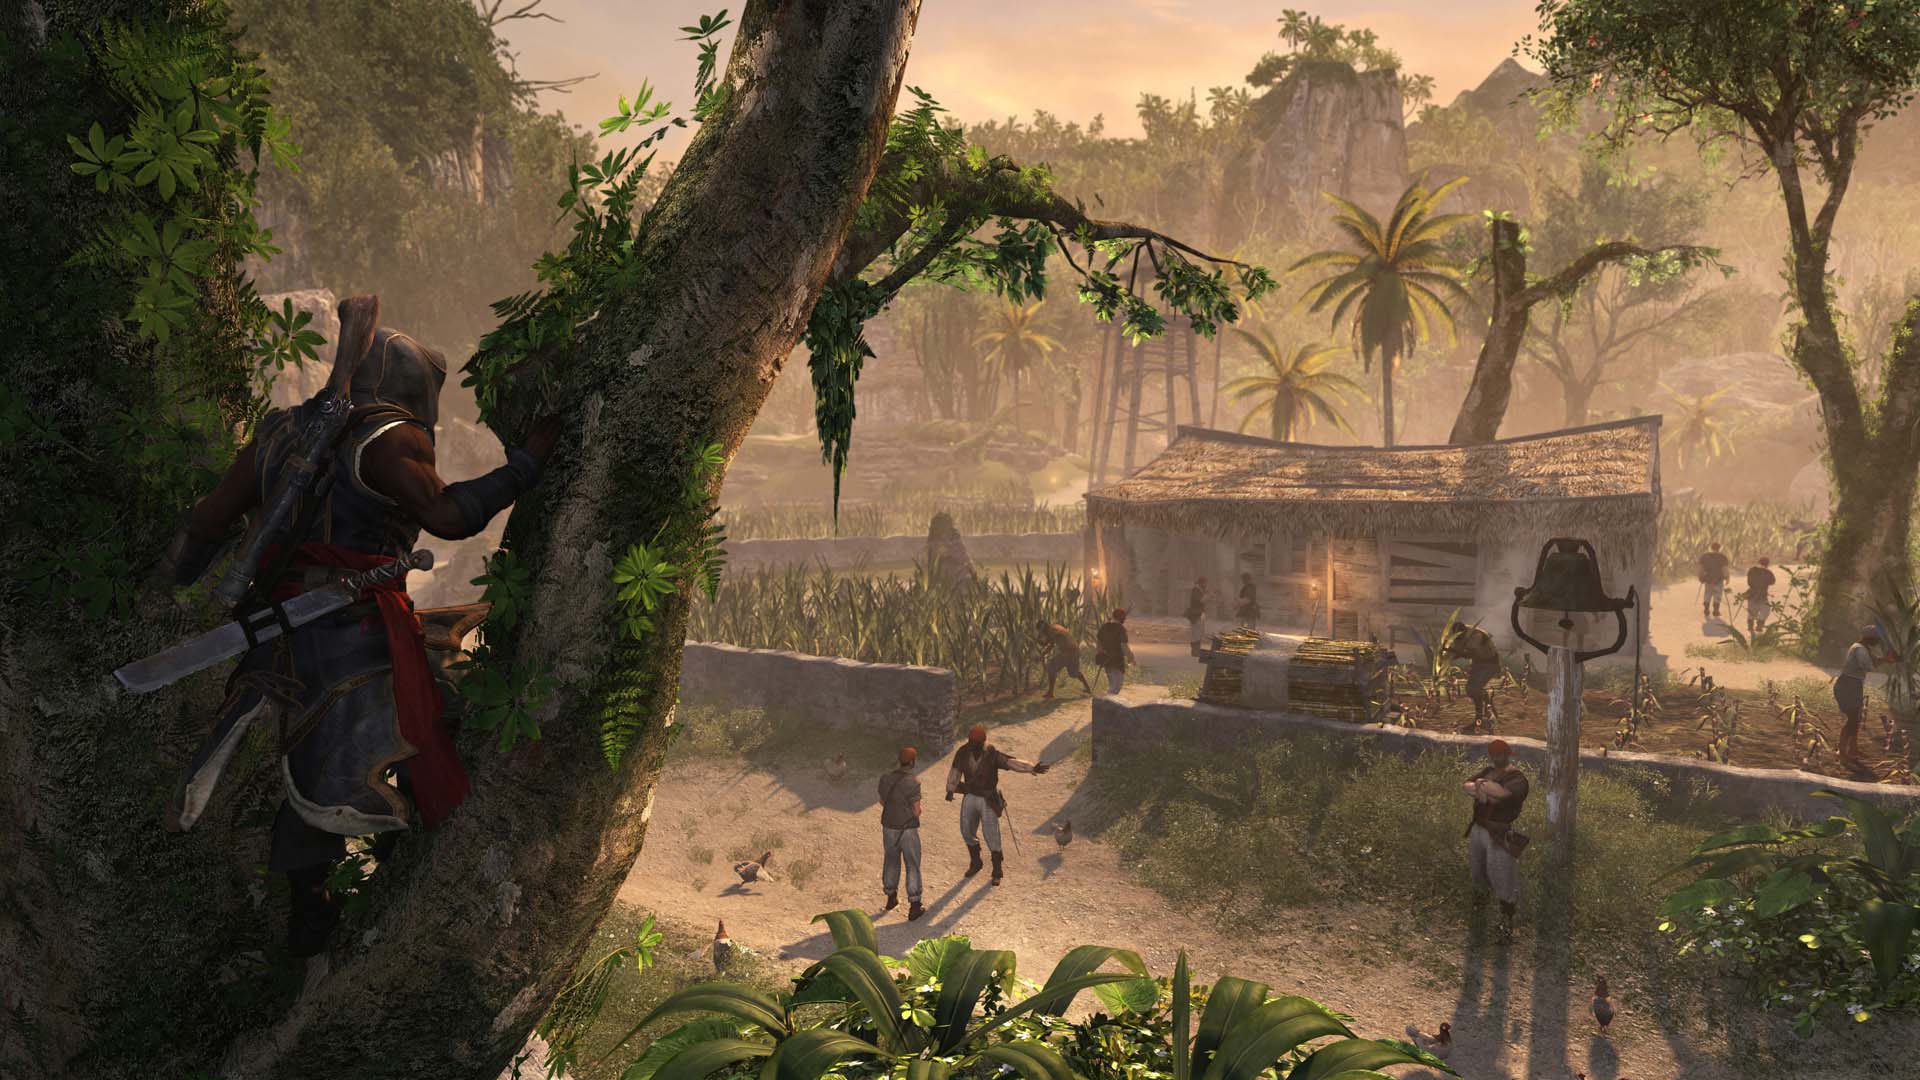 Assassins Creed Freedom Cry ps3 psn - Donattelo Games - Gift Card PSN, Jogo  de PS3, PS4 e PS5